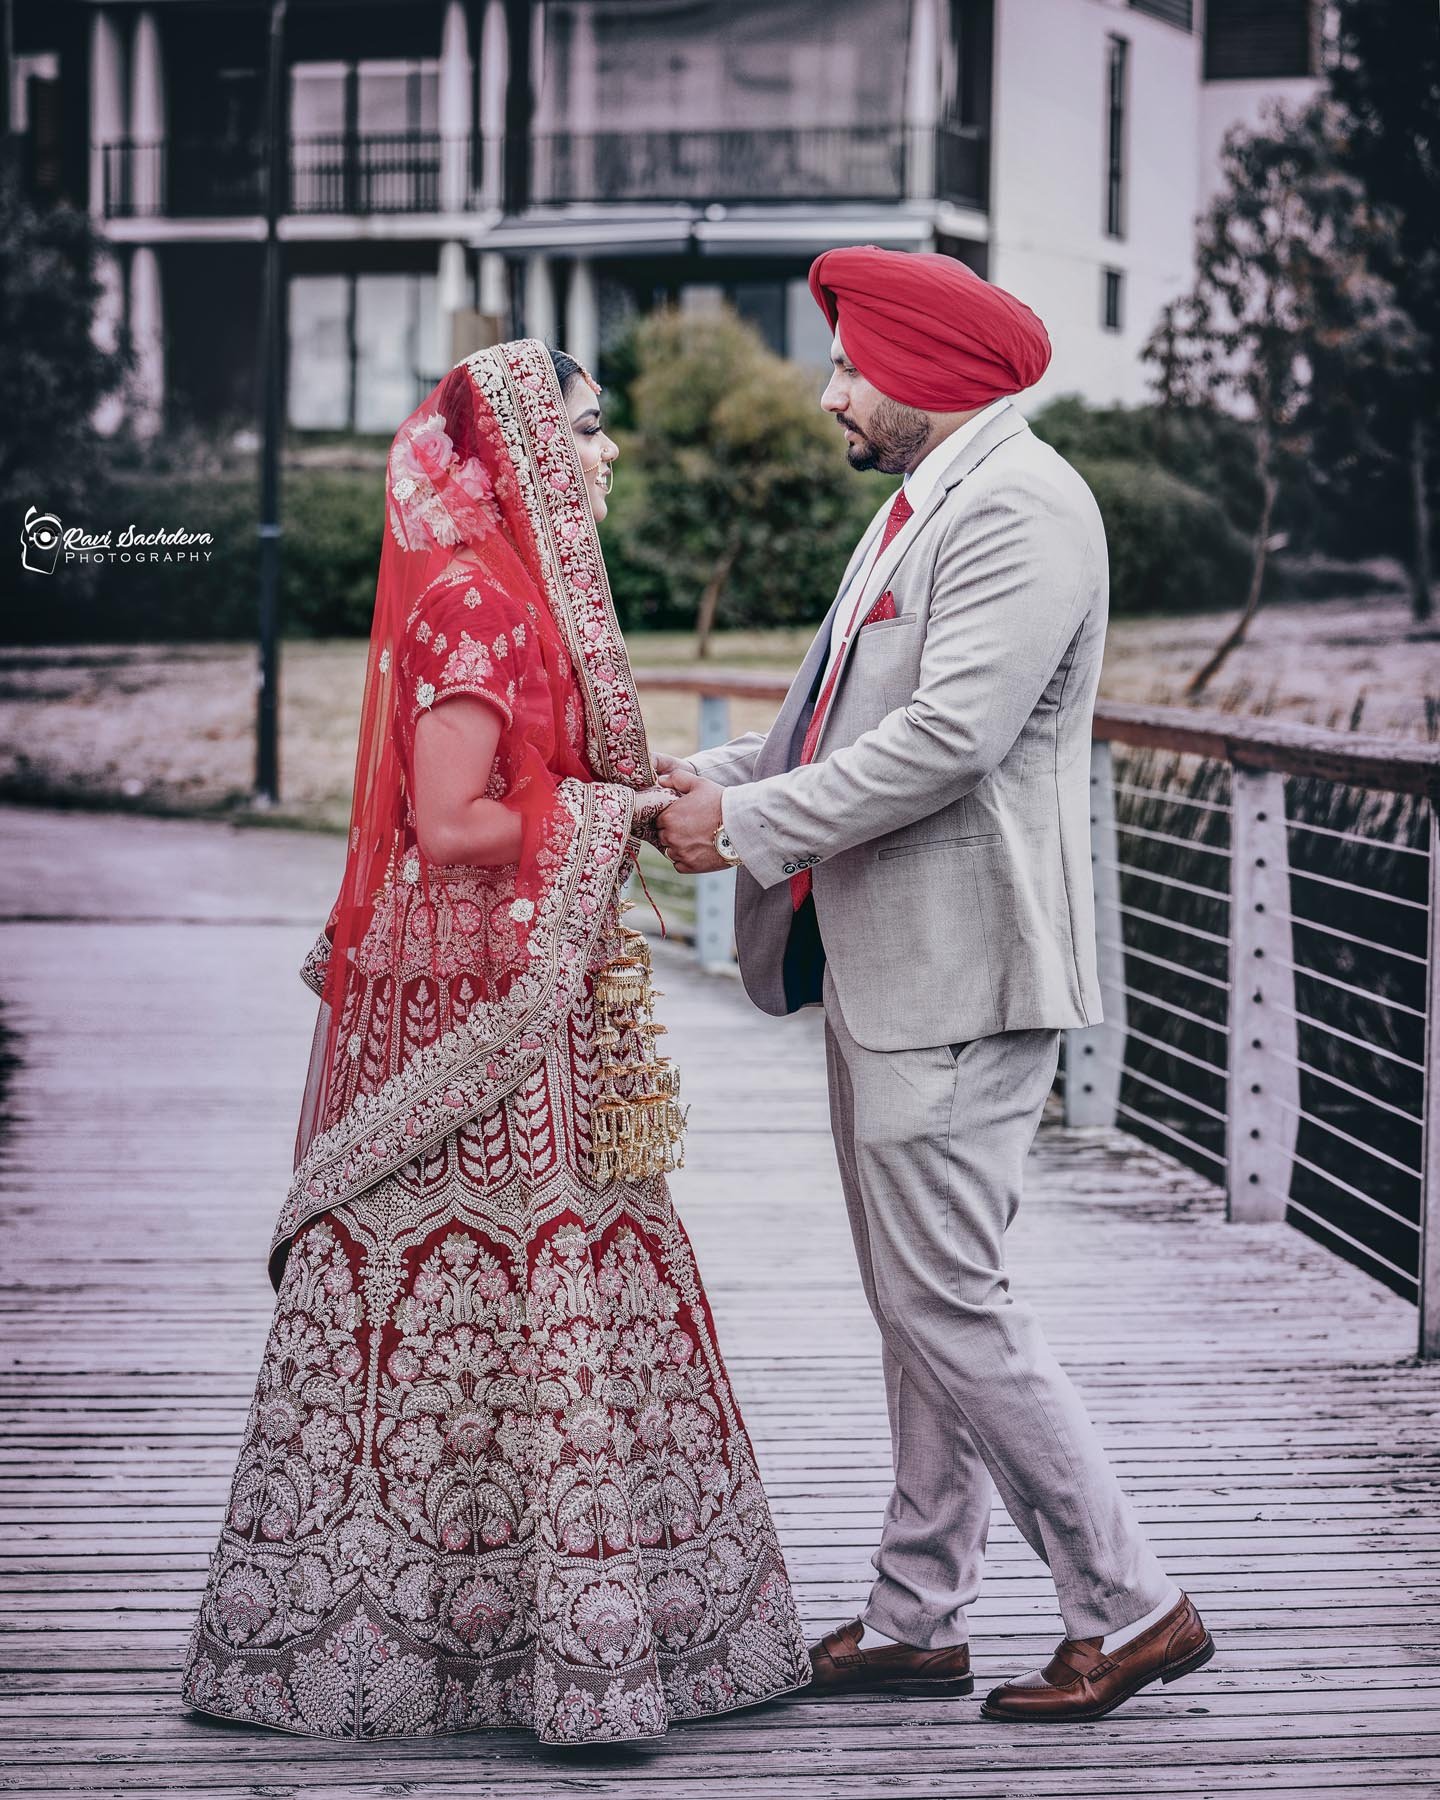 Sikh wedding in melbourne , Punjabi wedding in melbourne indian wedding photographers